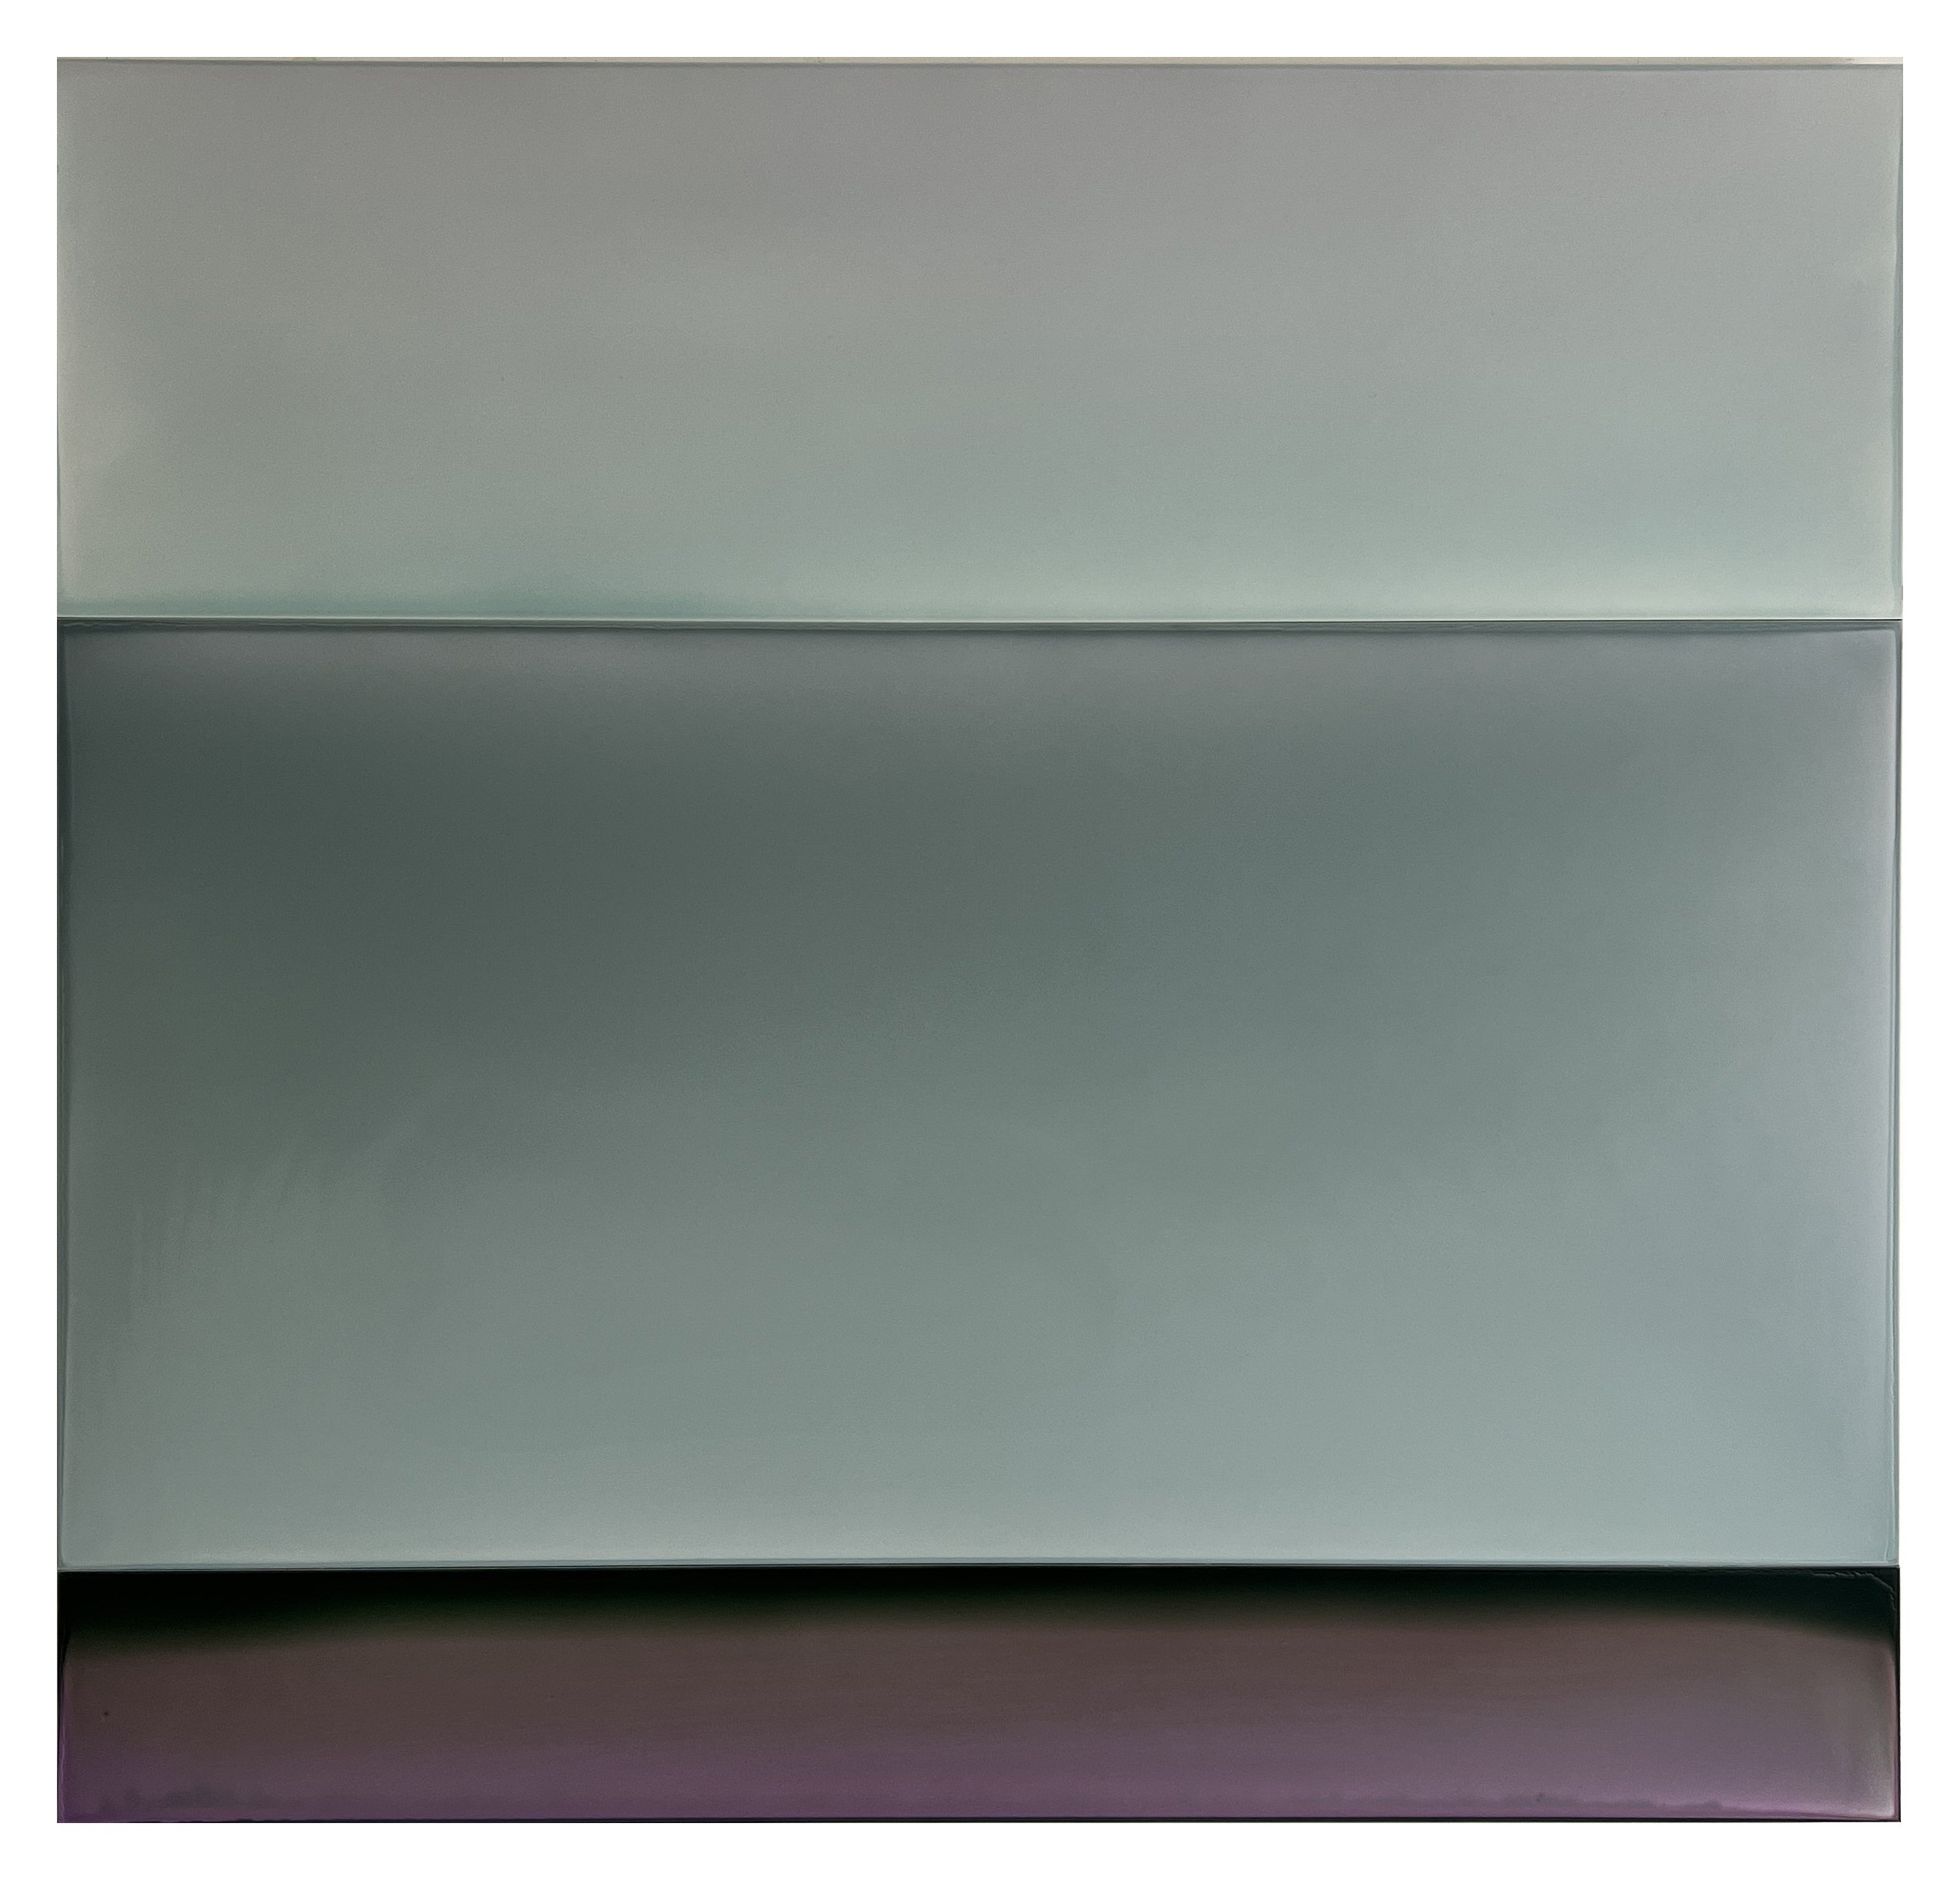   Room and View   48” x 50”  tinted polymer on Dibond panel 